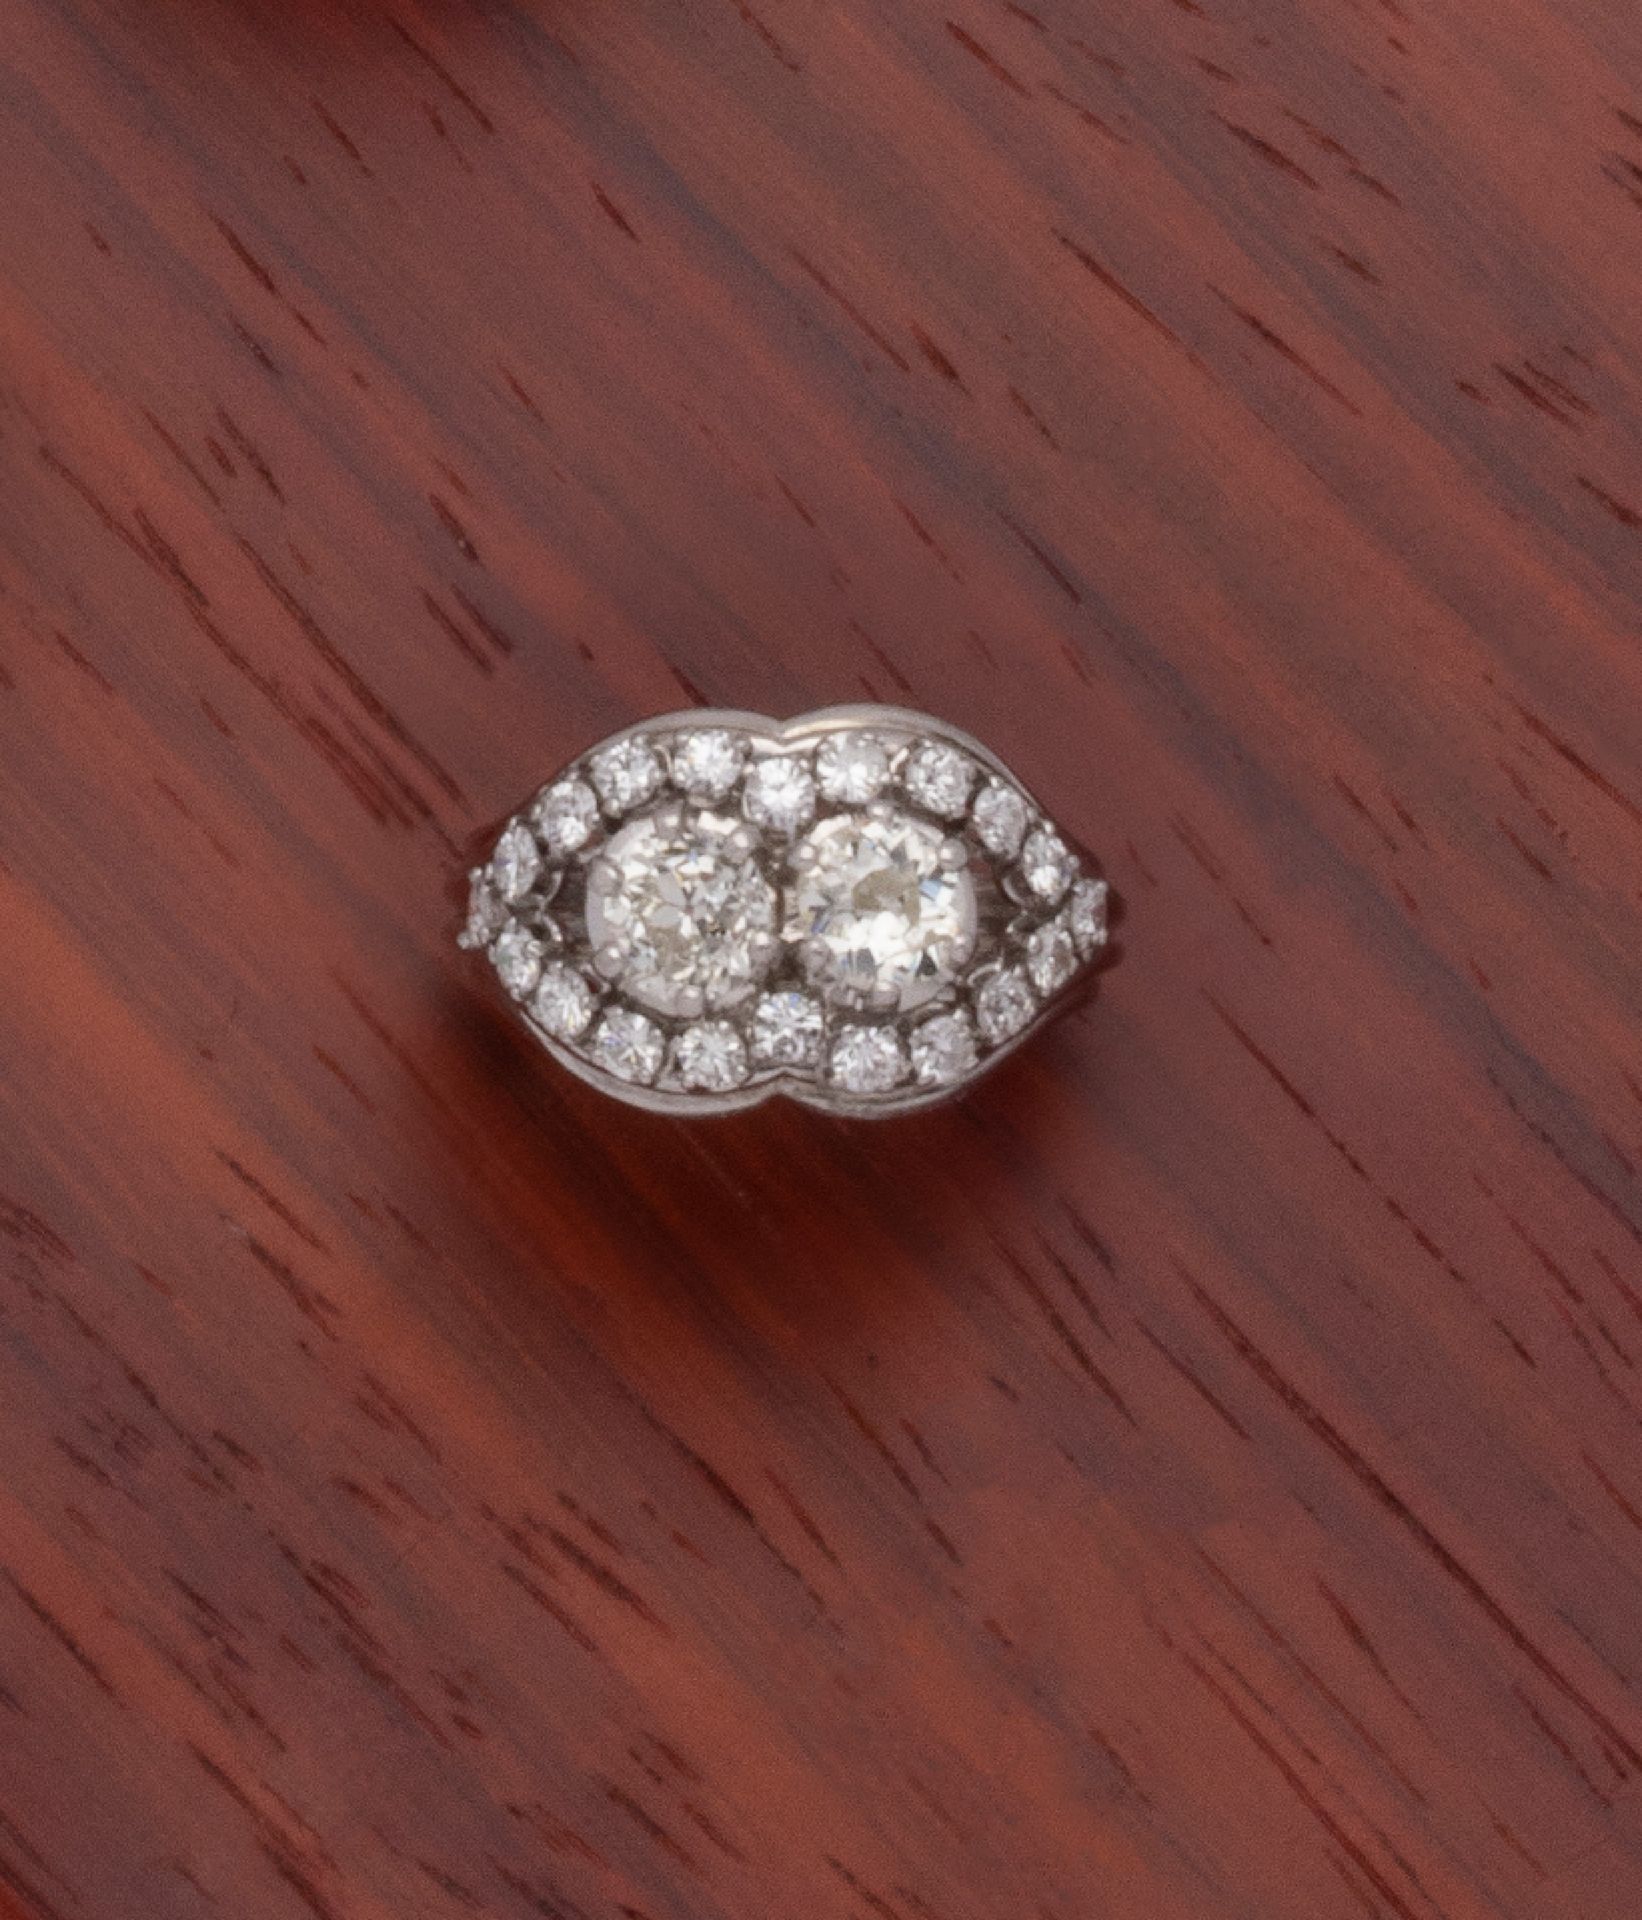 Null 18K(750/1000)白金戒指，以爪式镶嵌的2颗老矿钻石为中心，约1克拉。它们被一排21颗明亮式切割的钻石所强调。

法国的工作。

手指大小 :&hellip;